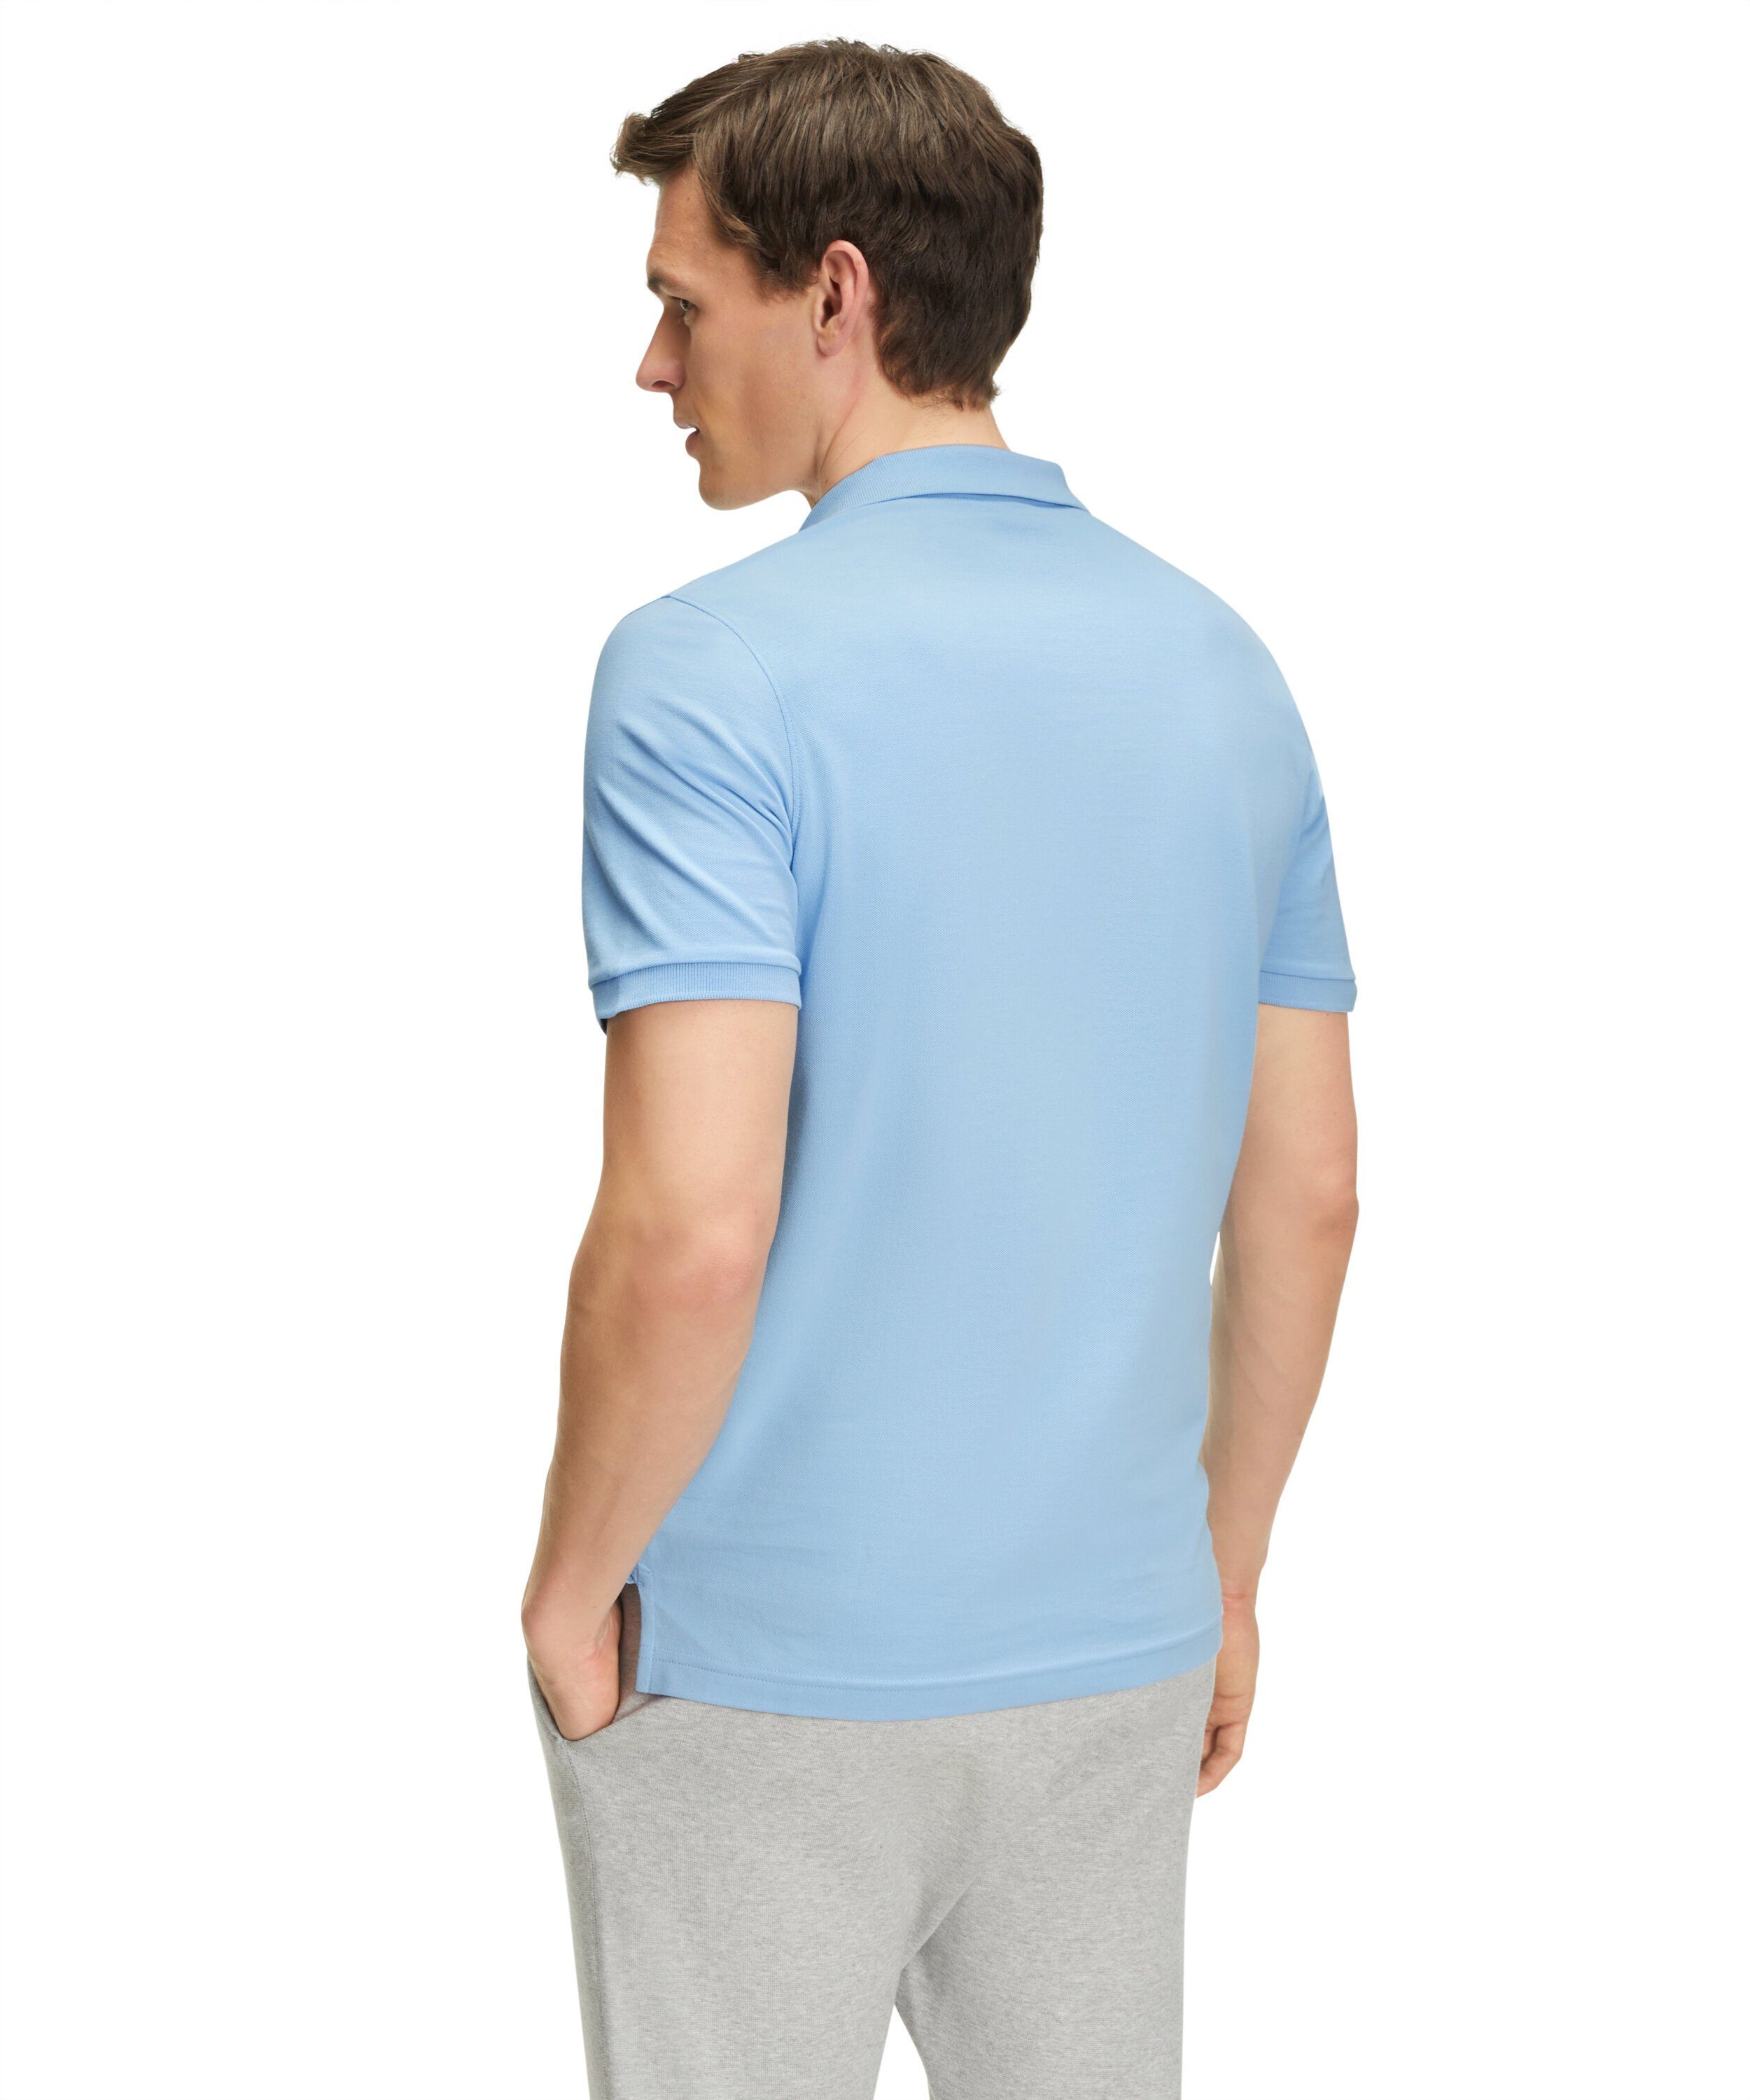 FALKE Poloshirt sky blue aus (6807) hochwertiger Pima-Baumwolle